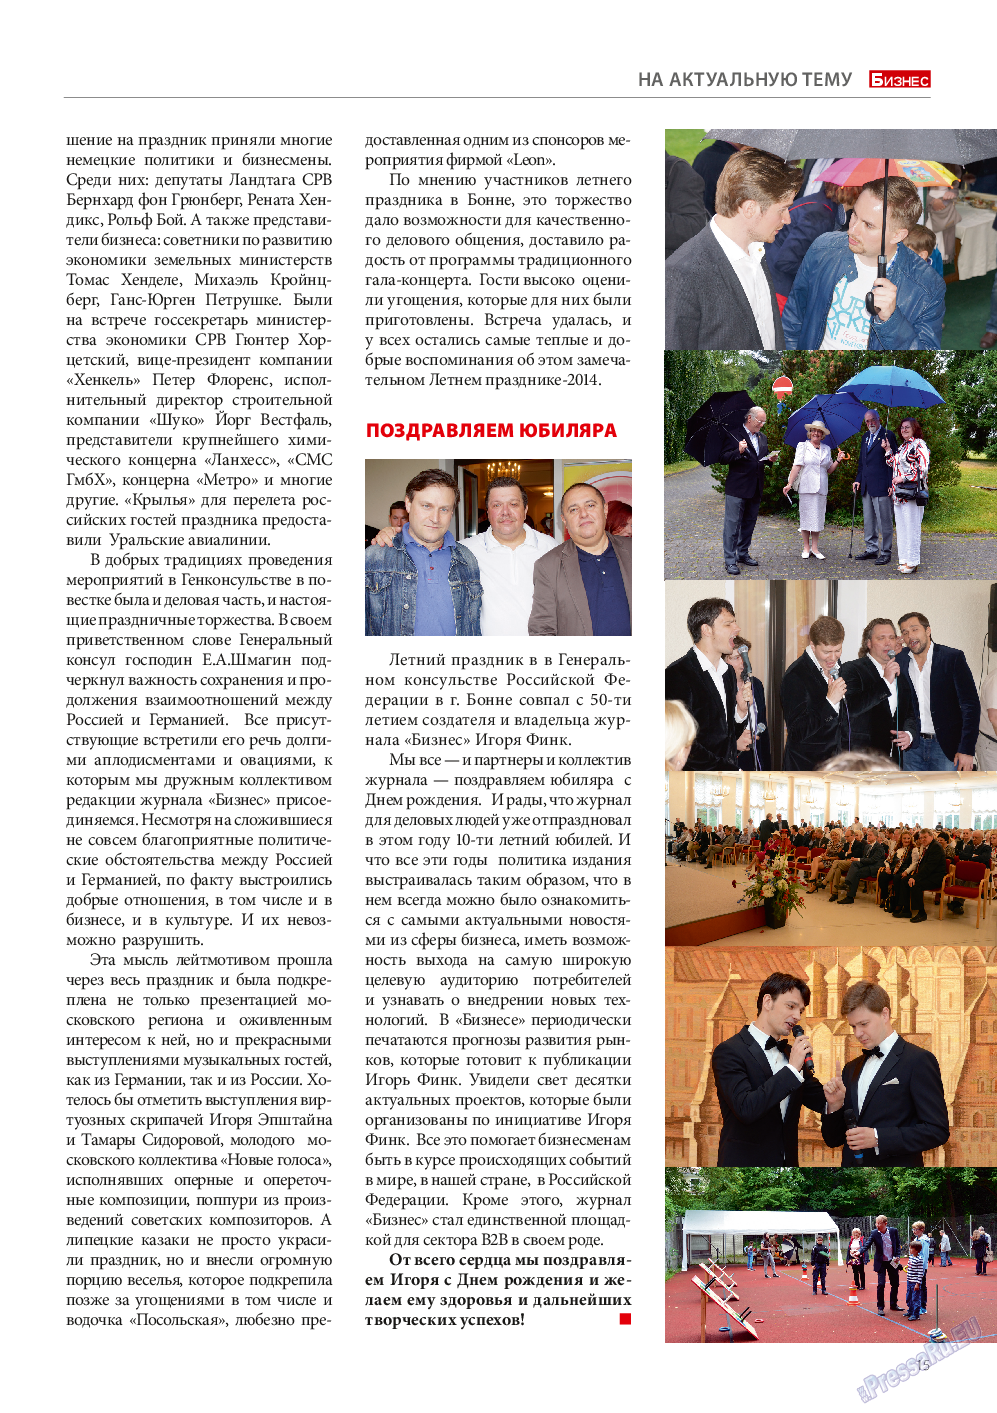 Бизнес (журнал). 2014 год, номер 7, стр. 15